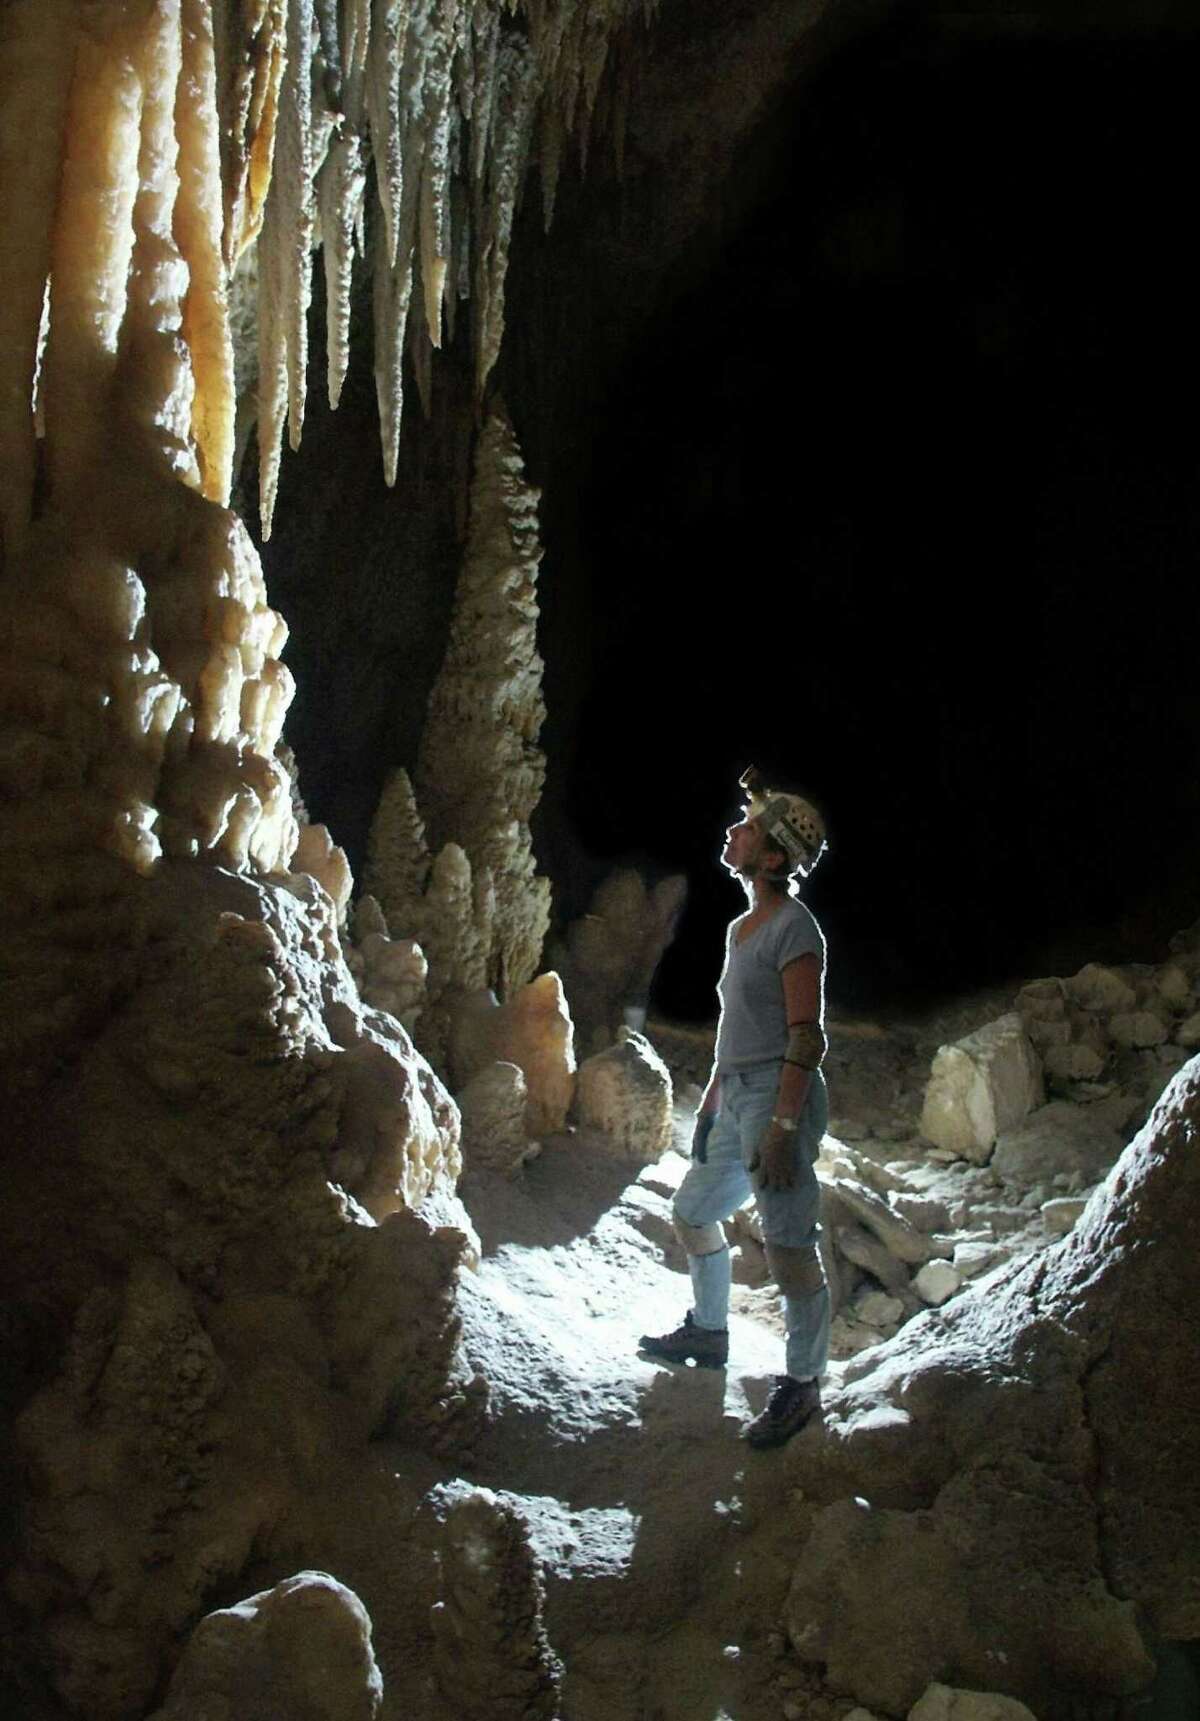 Kickapoo Caverns State Park is located near Bracketville.